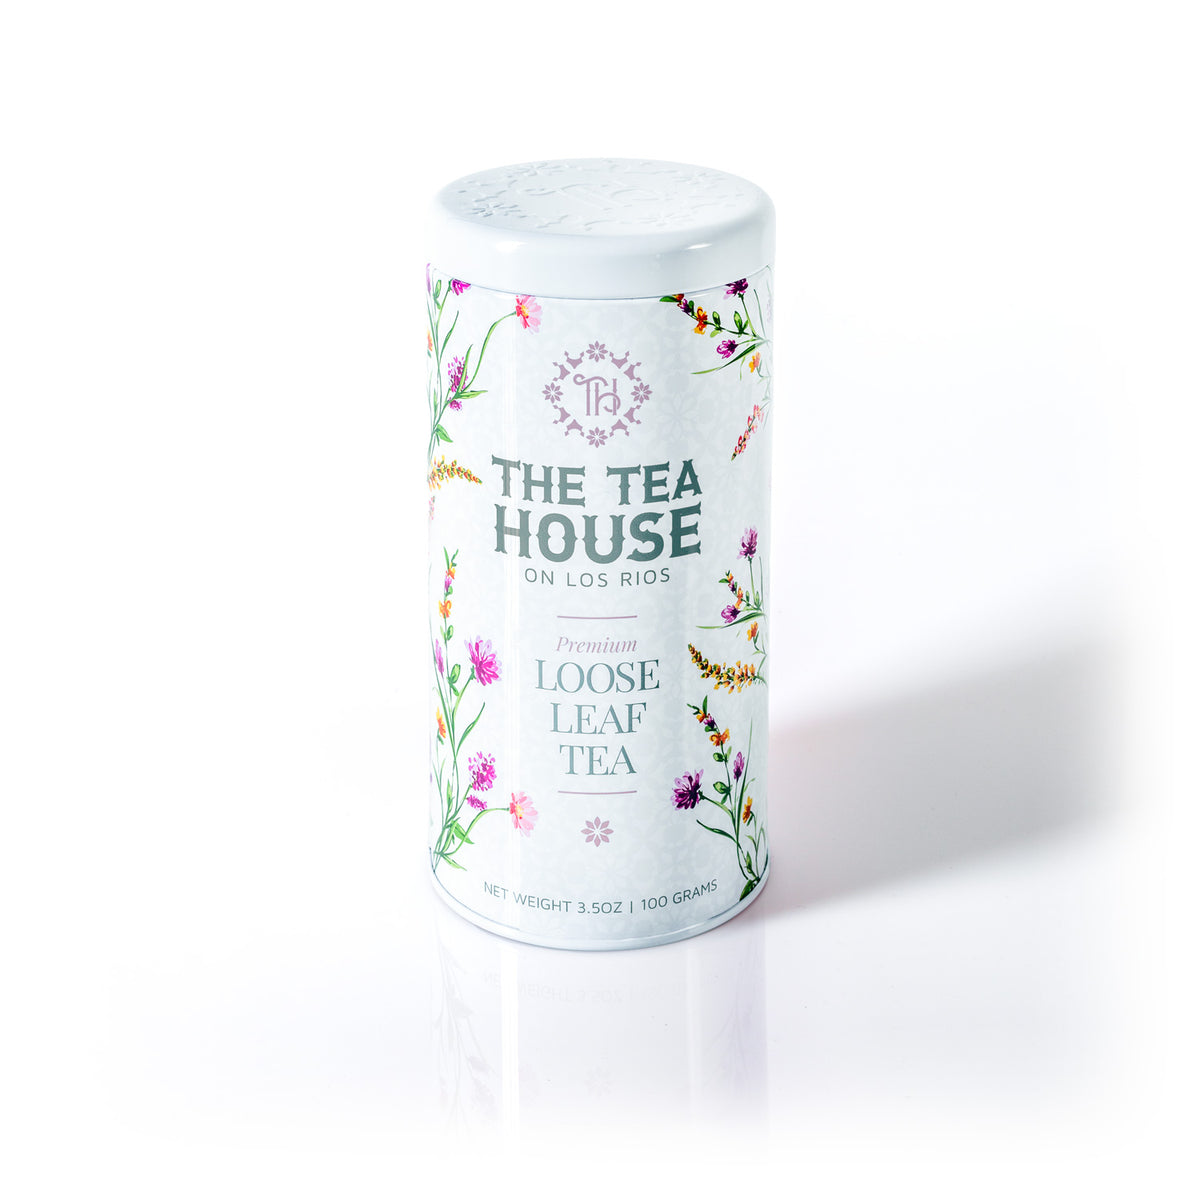 The Tea House on Los Rios launches a NEW 100g Loose Leaf Tea Tin